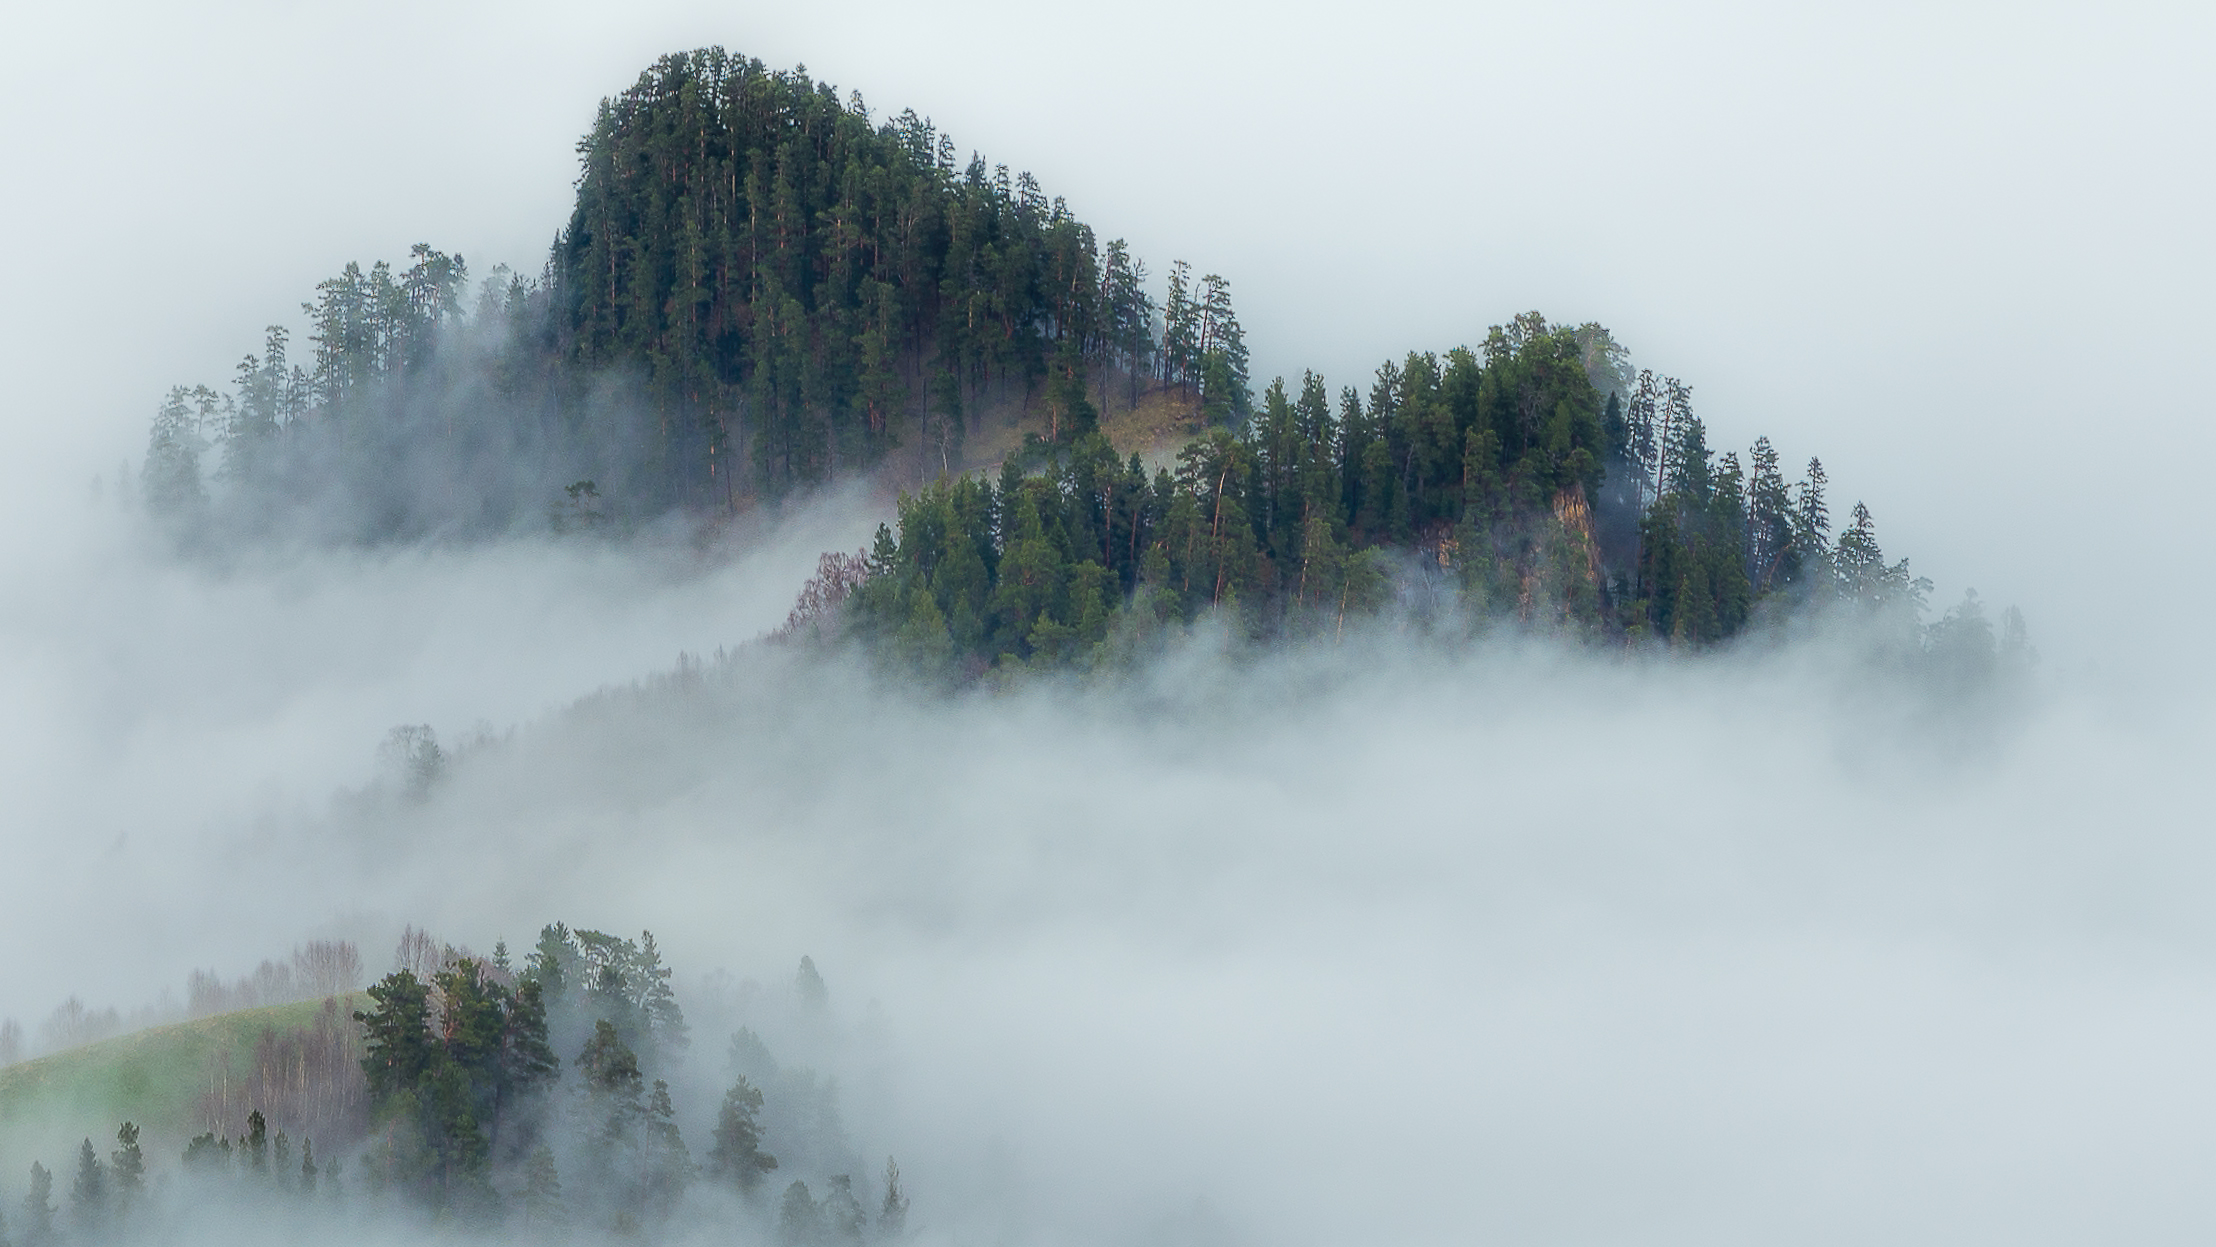 Условиях сильного тумана. Туманный пейзаж. Самый сильный туман. Горы в тумане. Склон в тумане.